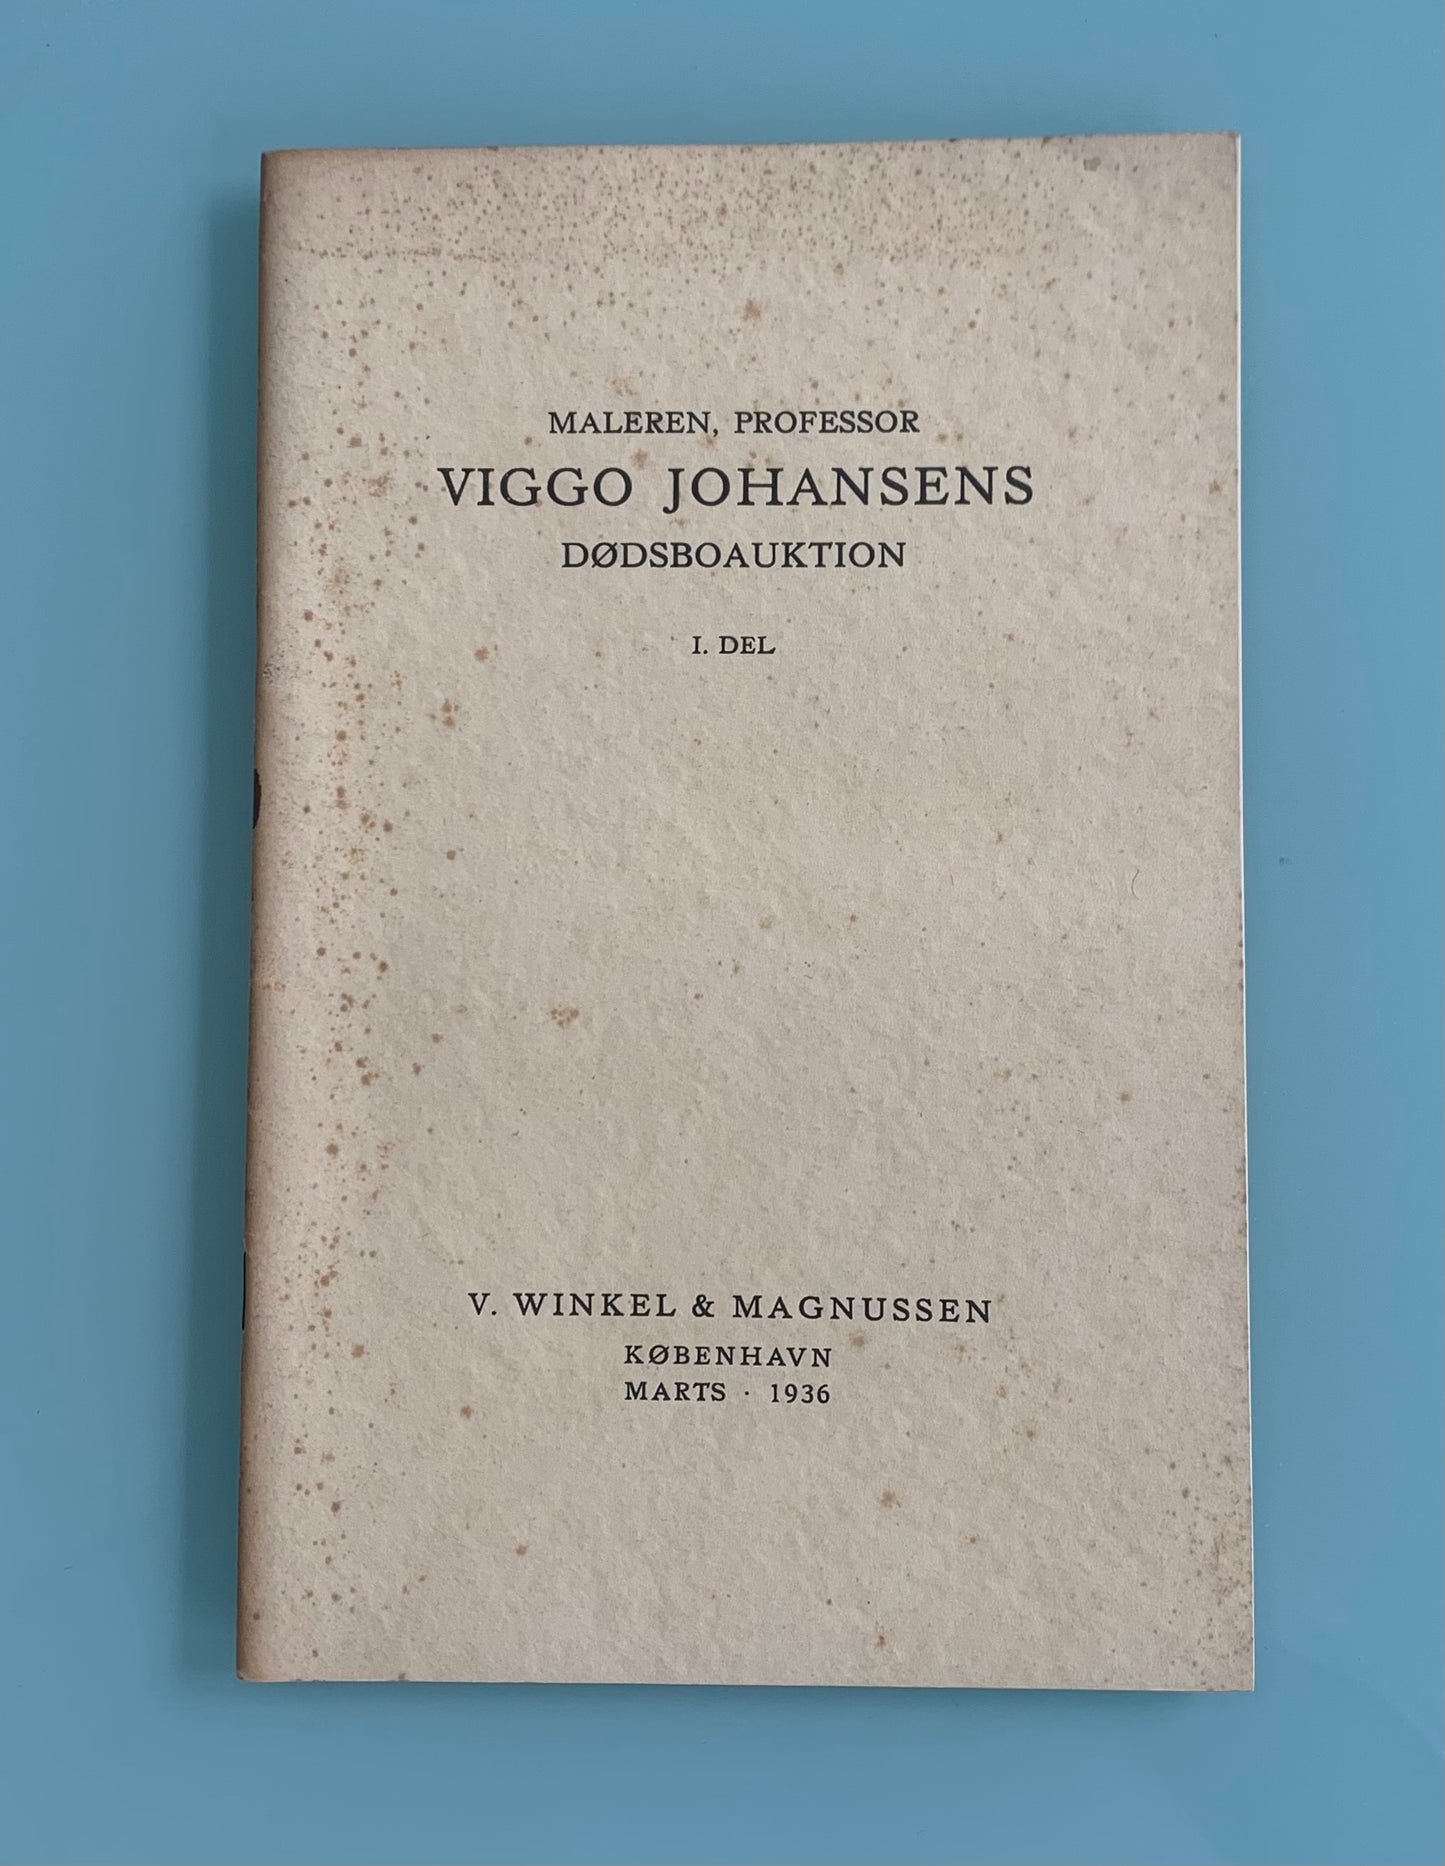 Viggo Johansen. Catalog from the artists estate auction, 1936